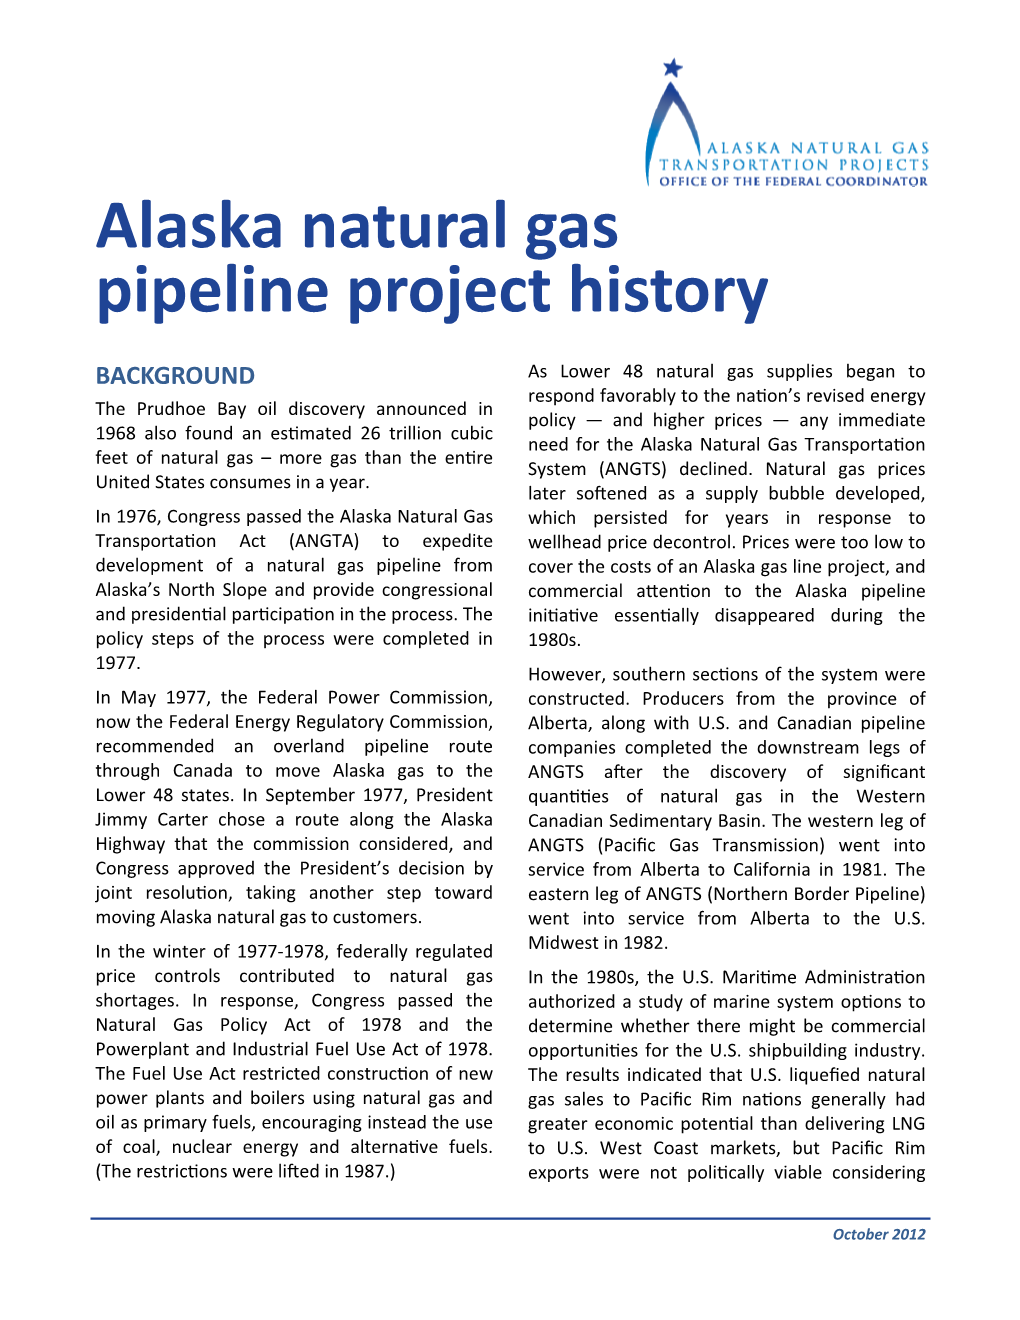 Alaska Natural Gas Pipeline Project History